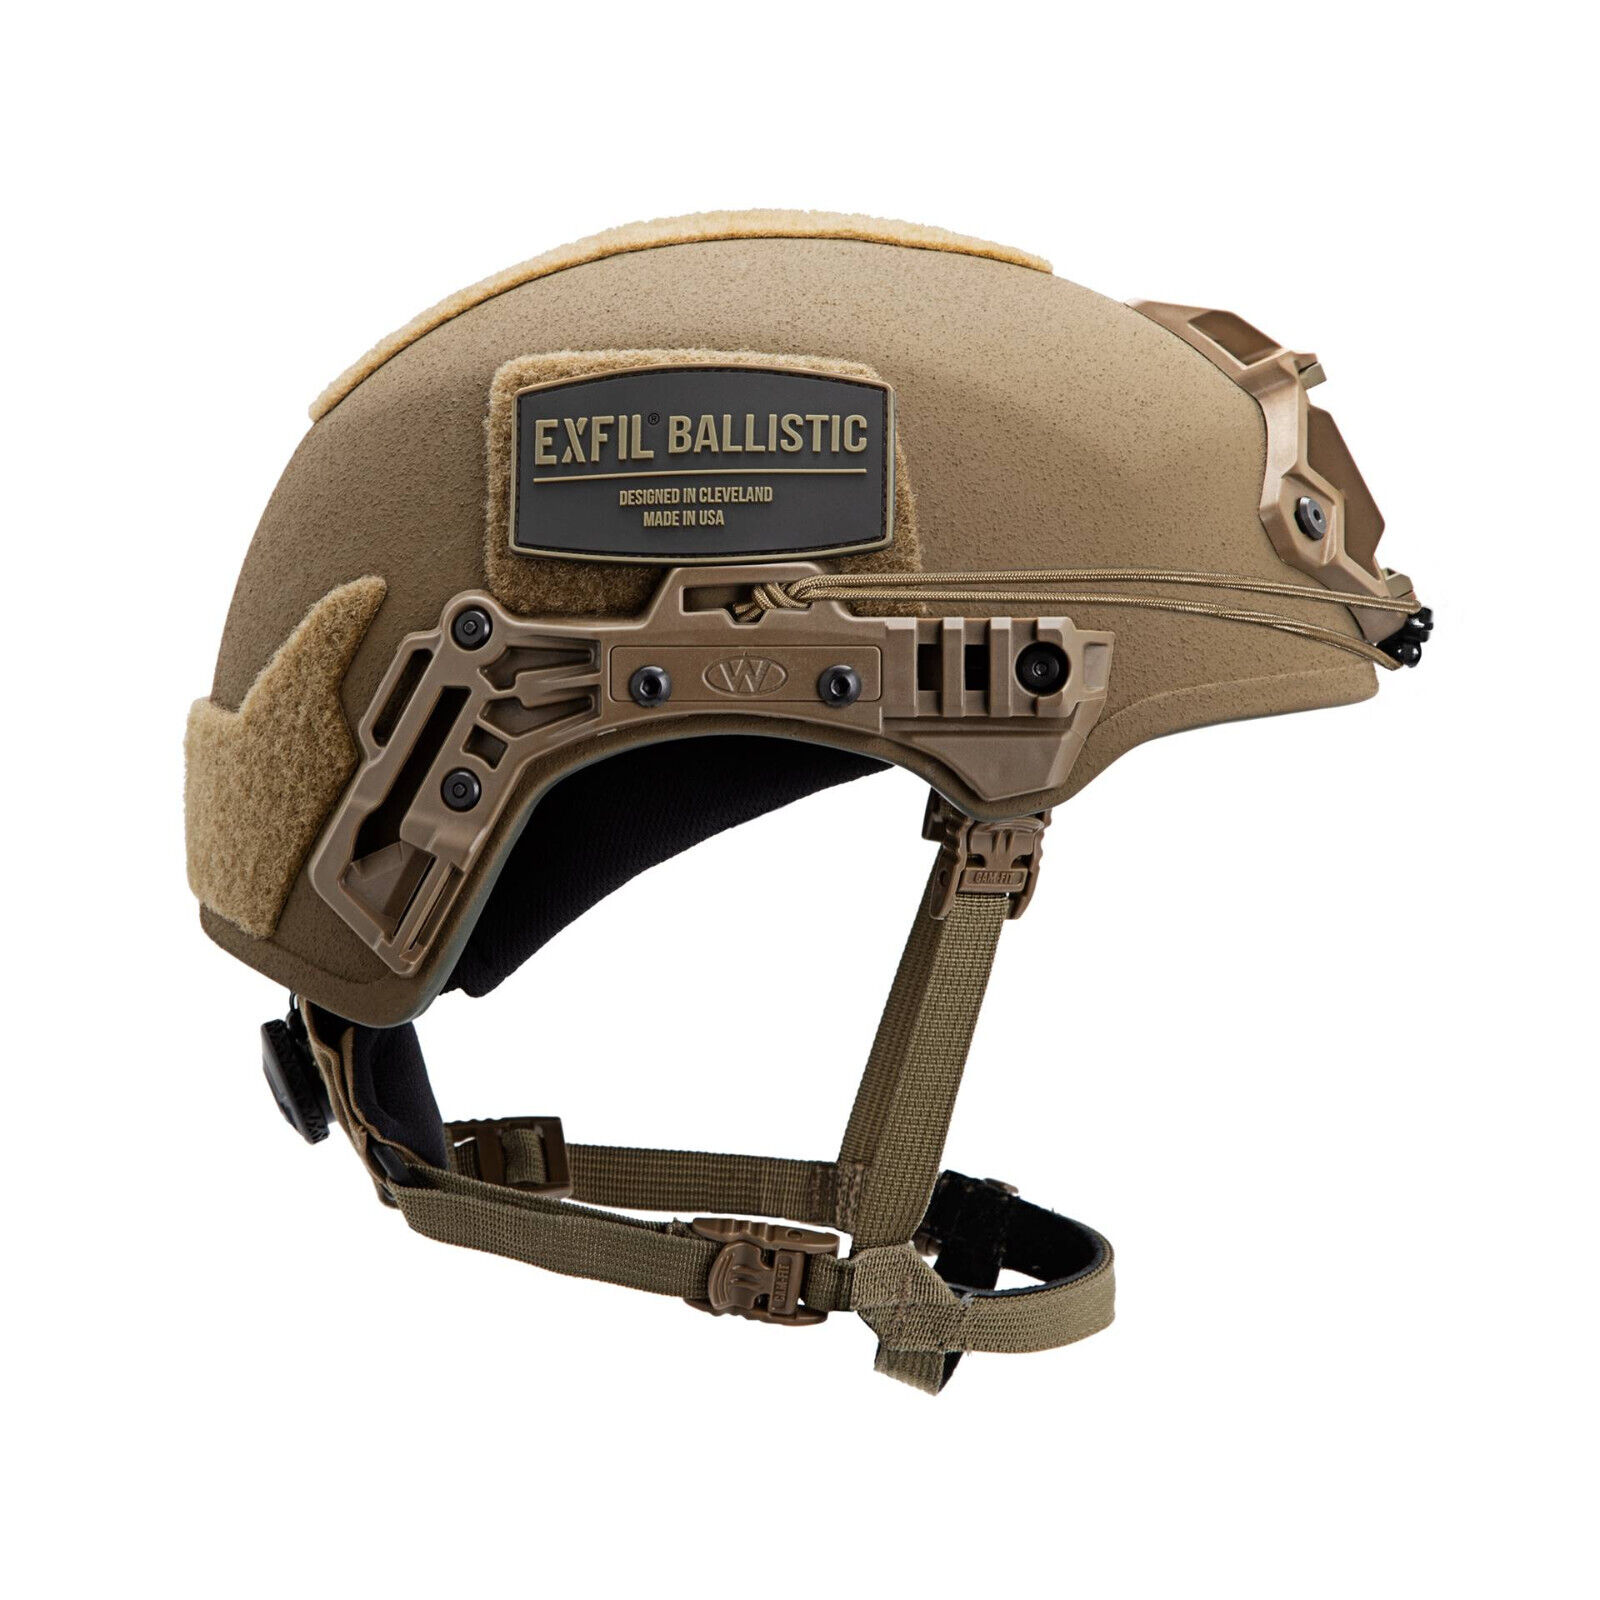 TEAM WENDY EXFIL BALLISTIC Helmet COYOTE  W/ NEW UPGRADED RAIL 3.0 Size 1